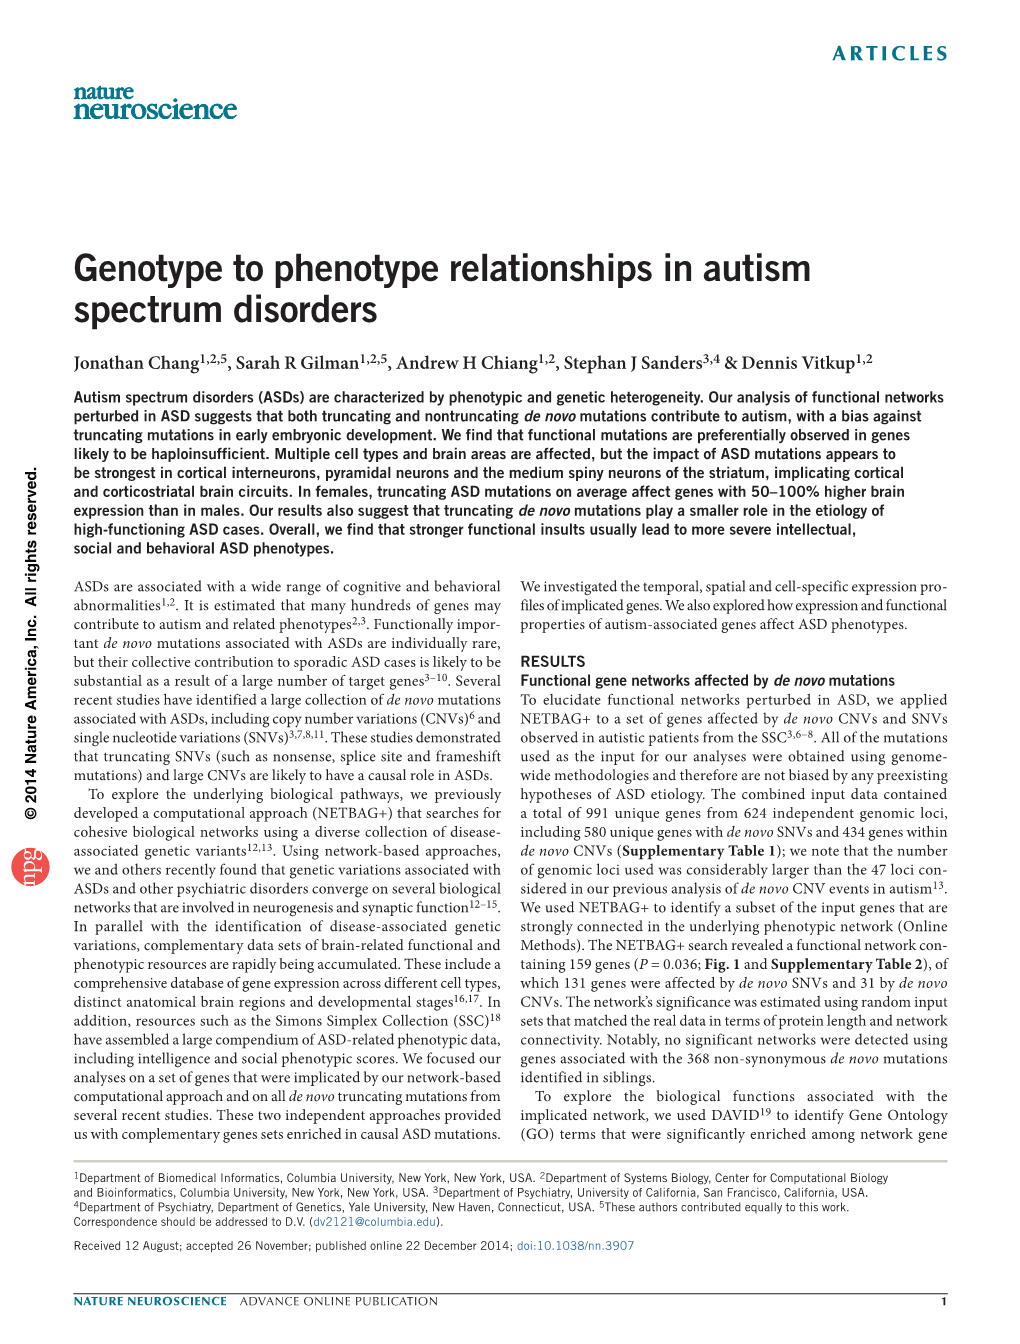 Genotype to Phenotype Relationships in Autism Spectrum Disorders